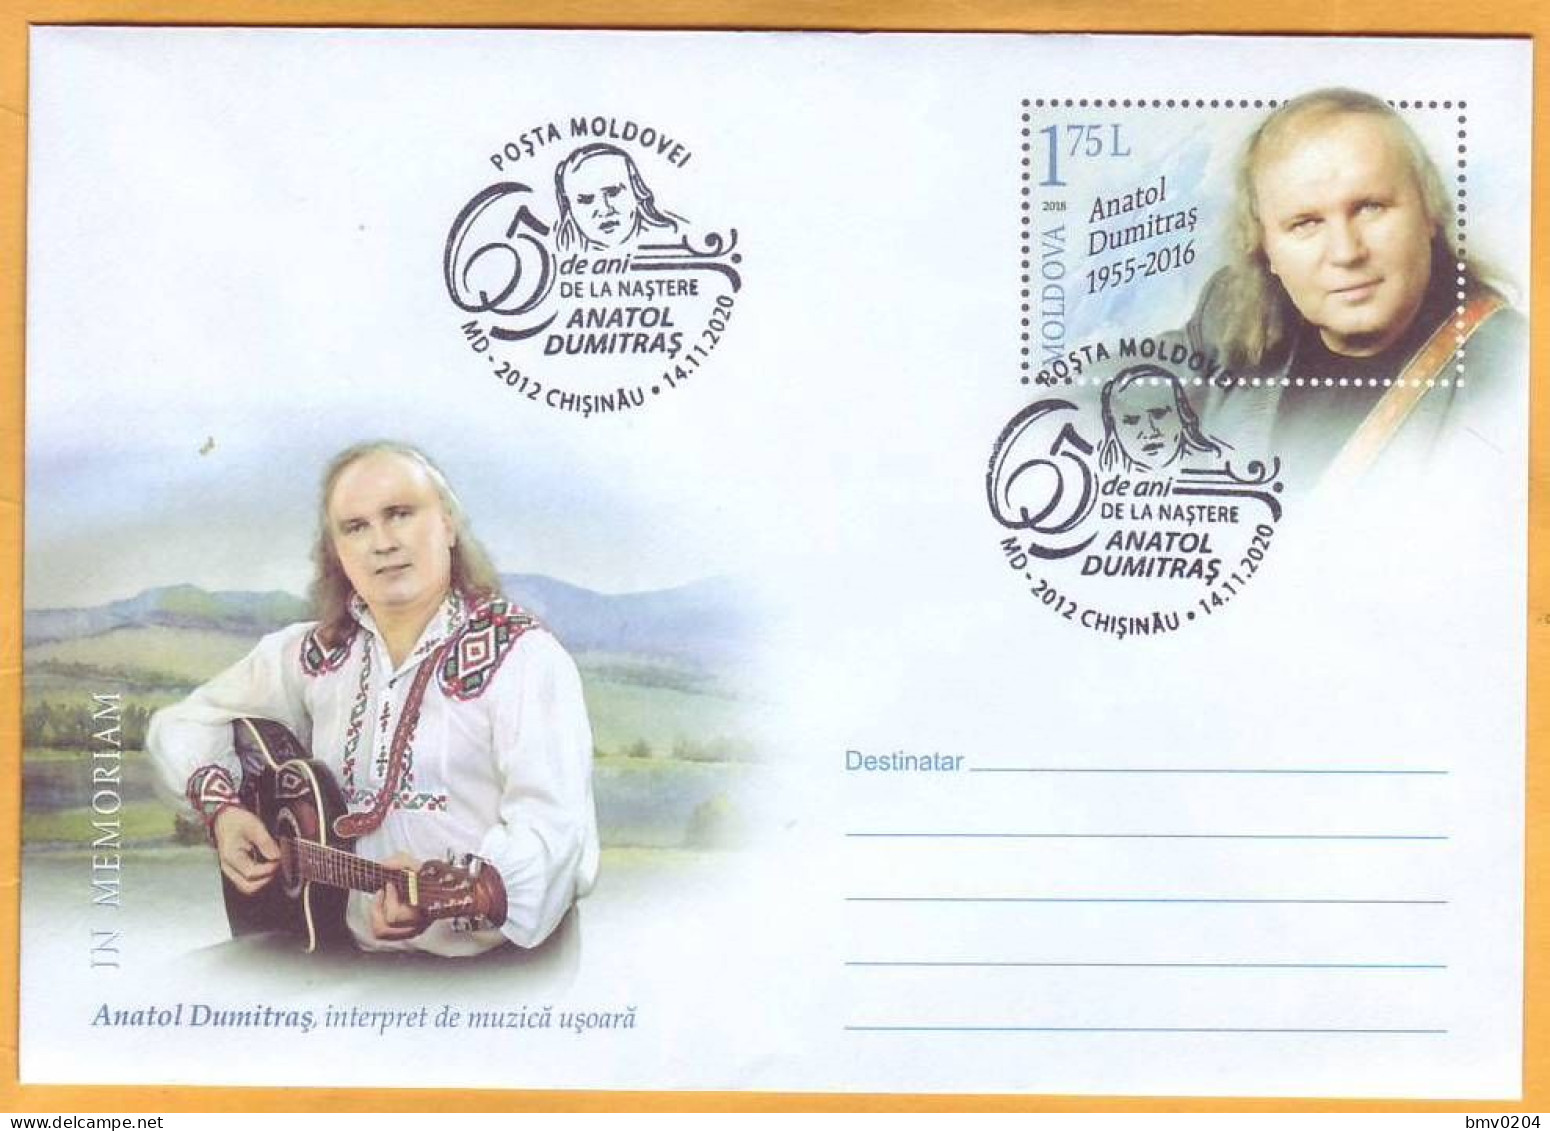 2020 2016 Moldova Moldavie Special Postmark "Anatol Dumitrash- 65th Birthday Anniversary" Music Performer Guitar Songs, - Music